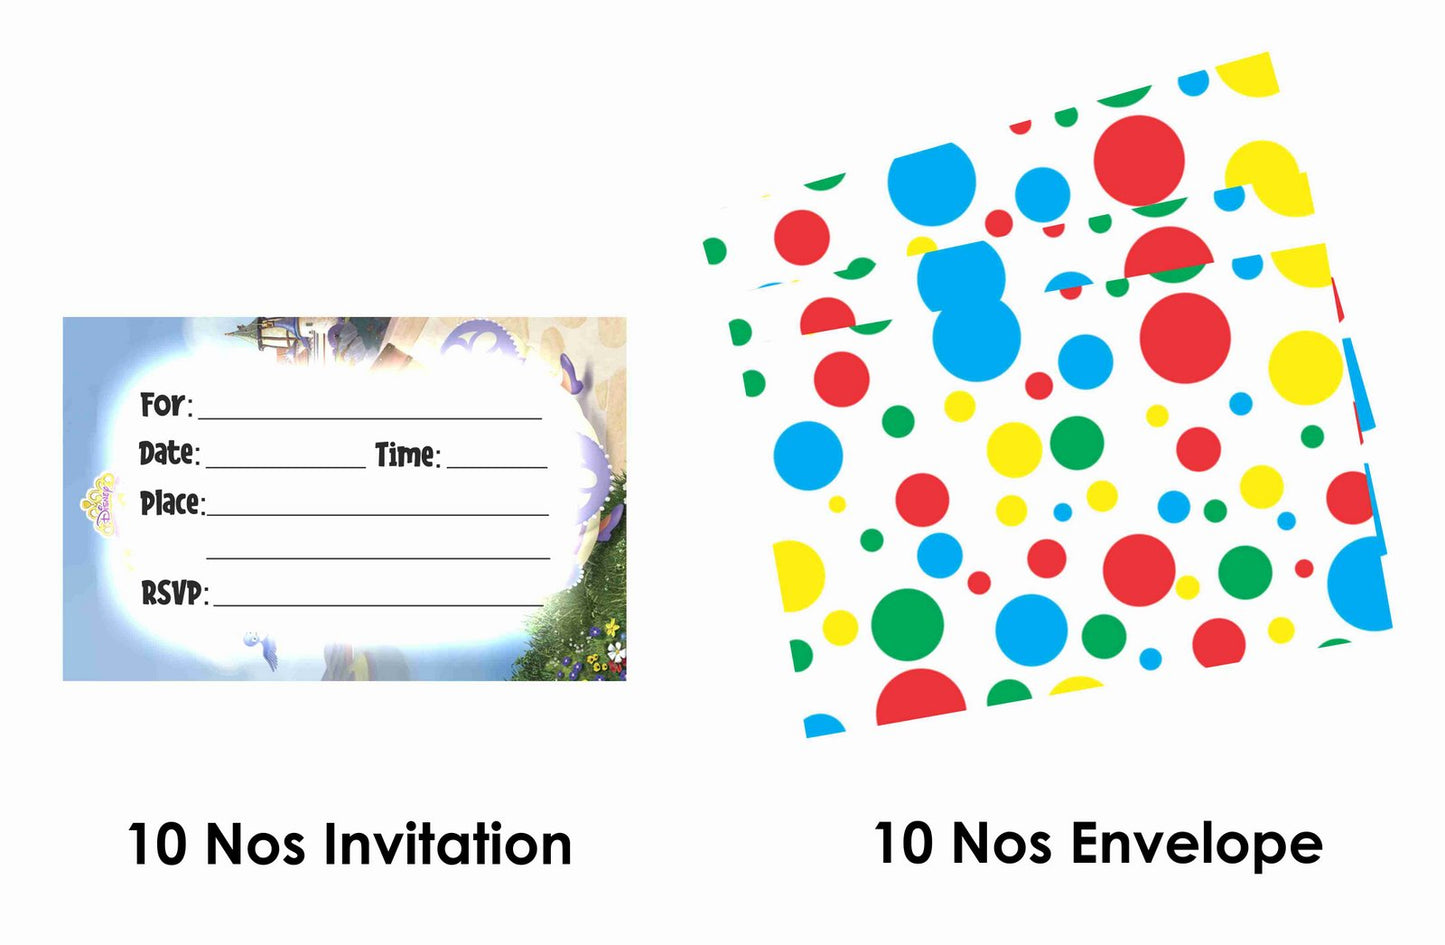 Sofia Theme Children's Birthday Party Invitations Cards with Envelopes - Kids Birthday Party Invitations for Boys or Girls,- Invitation Cards (Pack of 10)